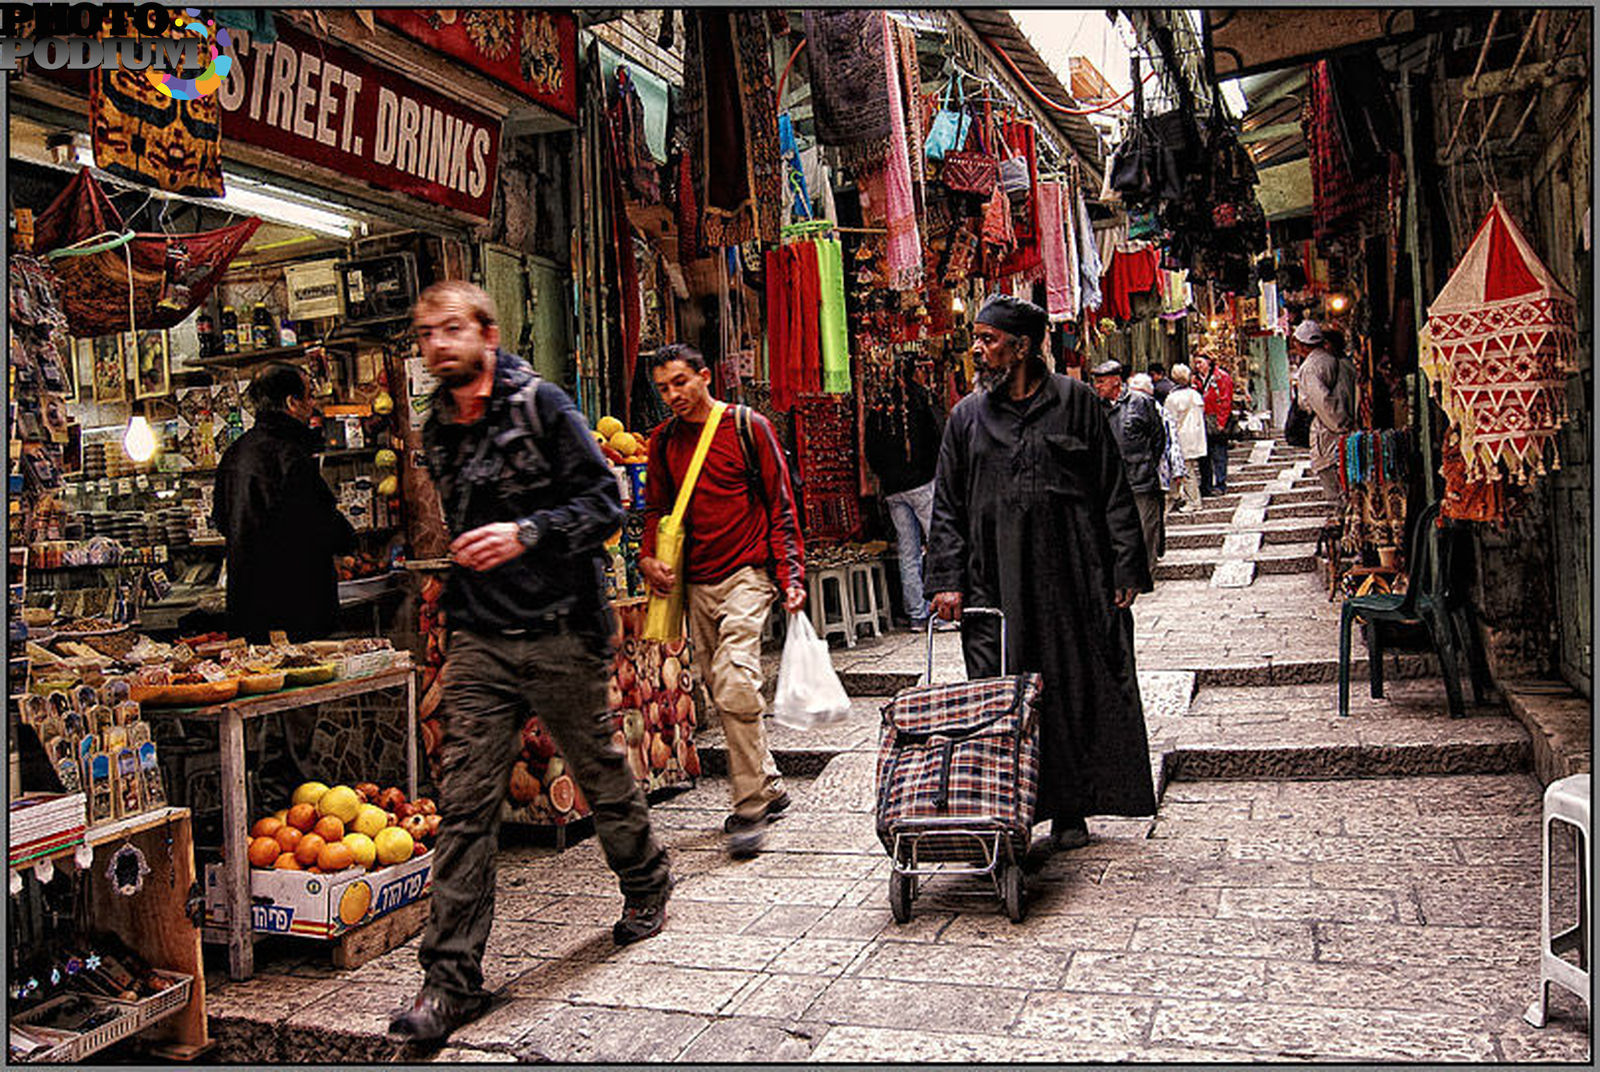 Старый город базар. Рынок Махане Иегуда. Иерусалим старый город базар. Улицы Иерусалима базар. Рынок в Иерусалиме.